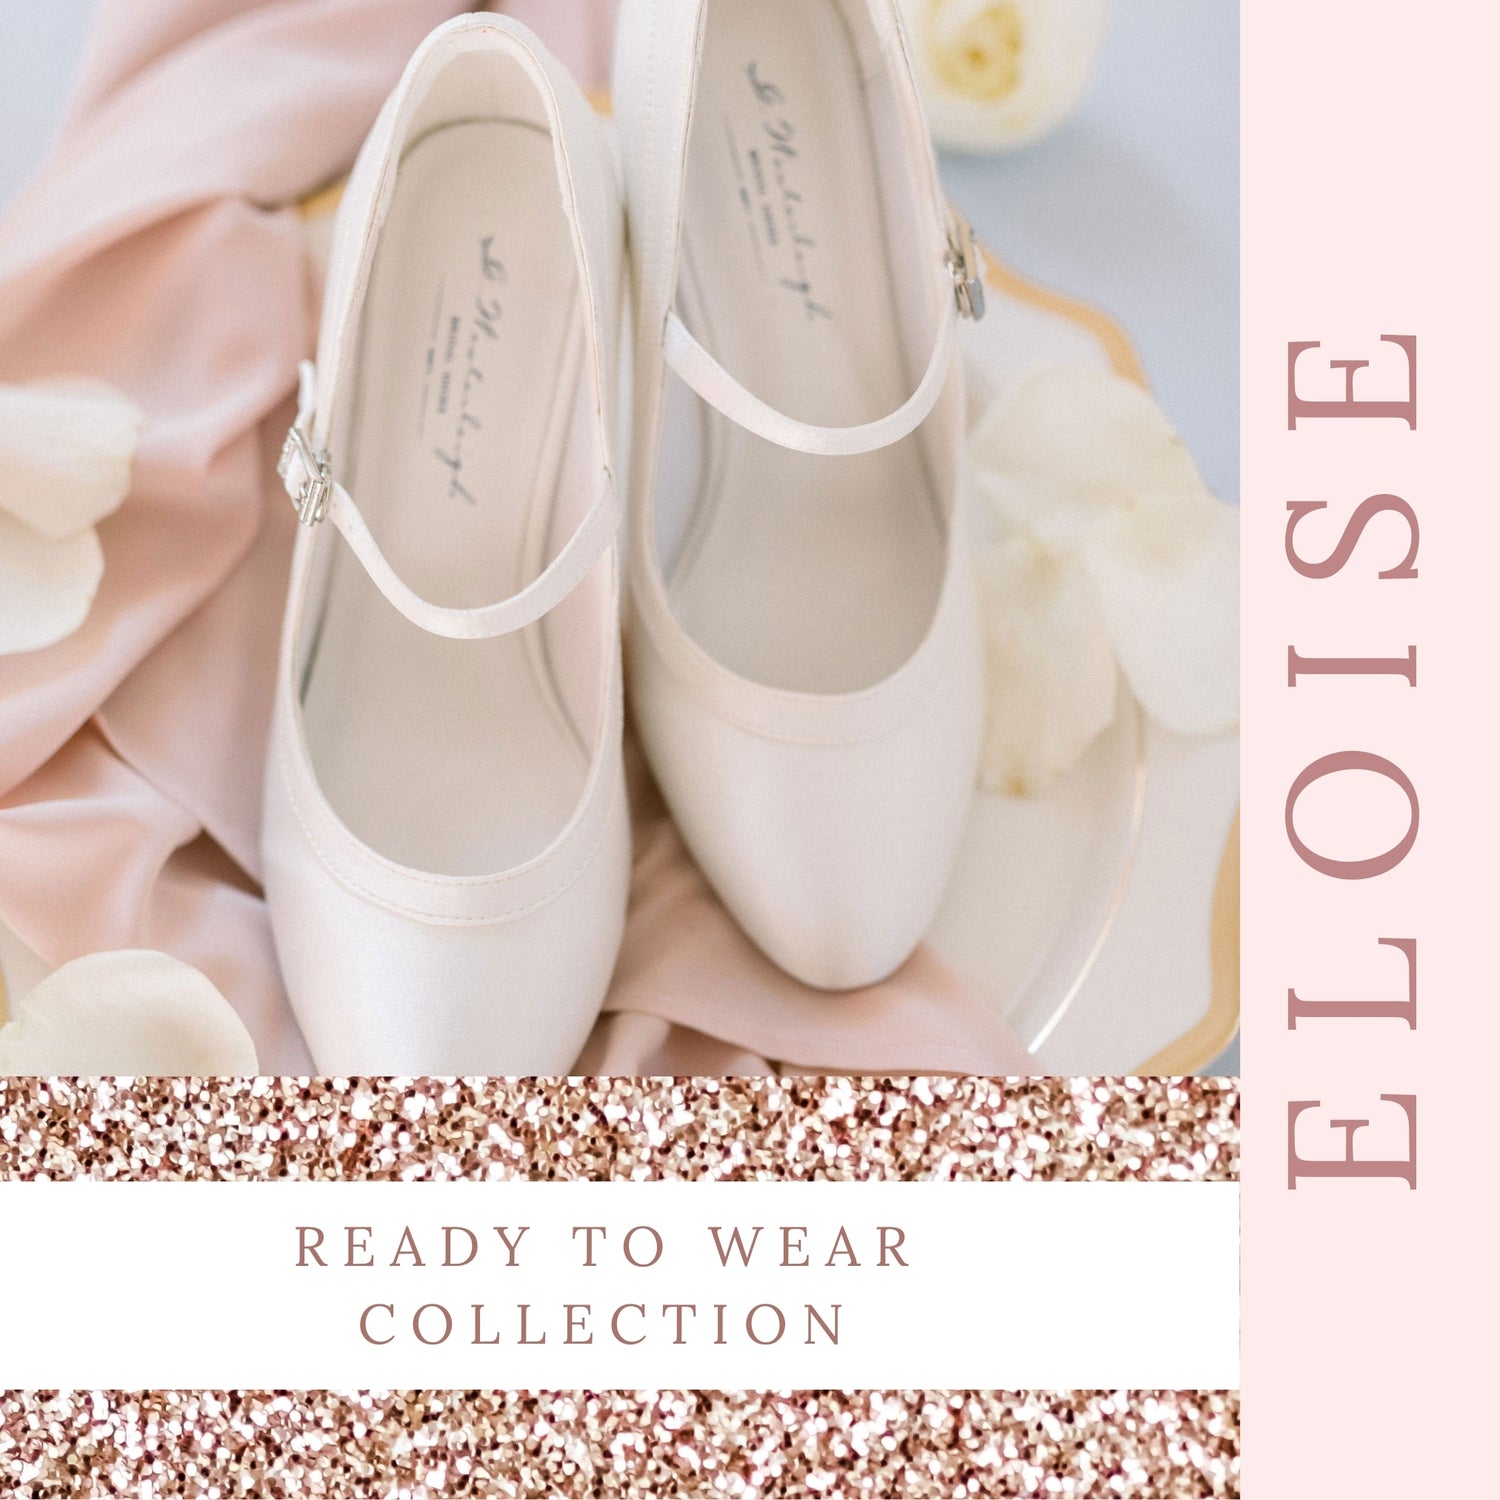 square-heel-wedding-shoes